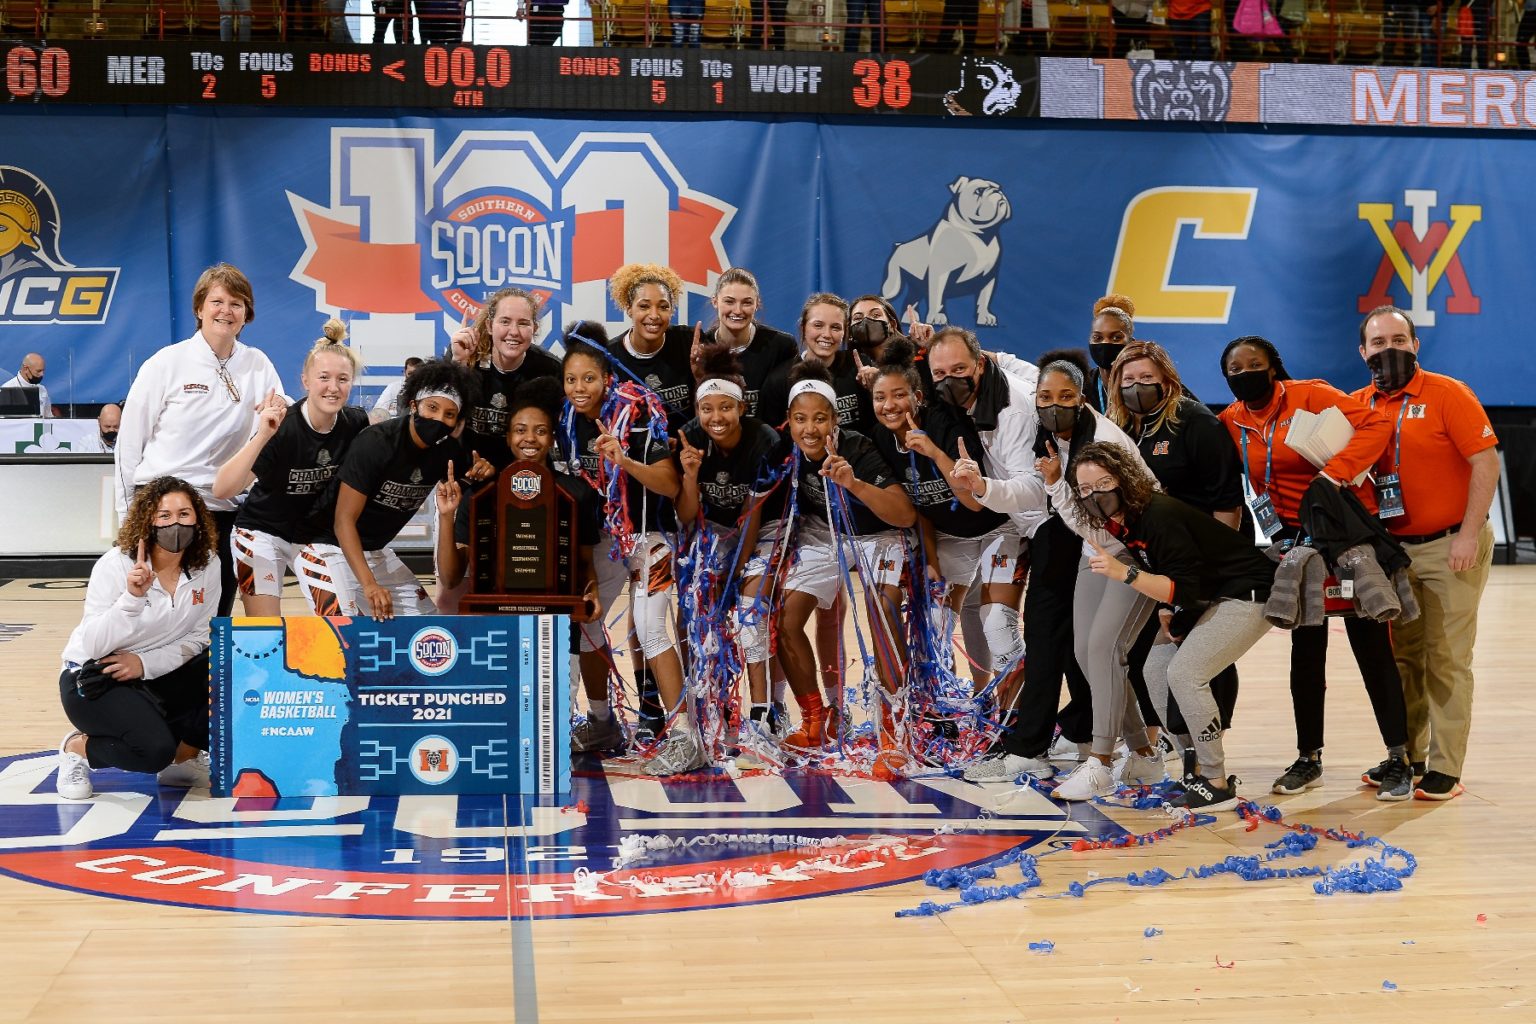 Mercer women’s basketball team wins 2021 SoCon championship